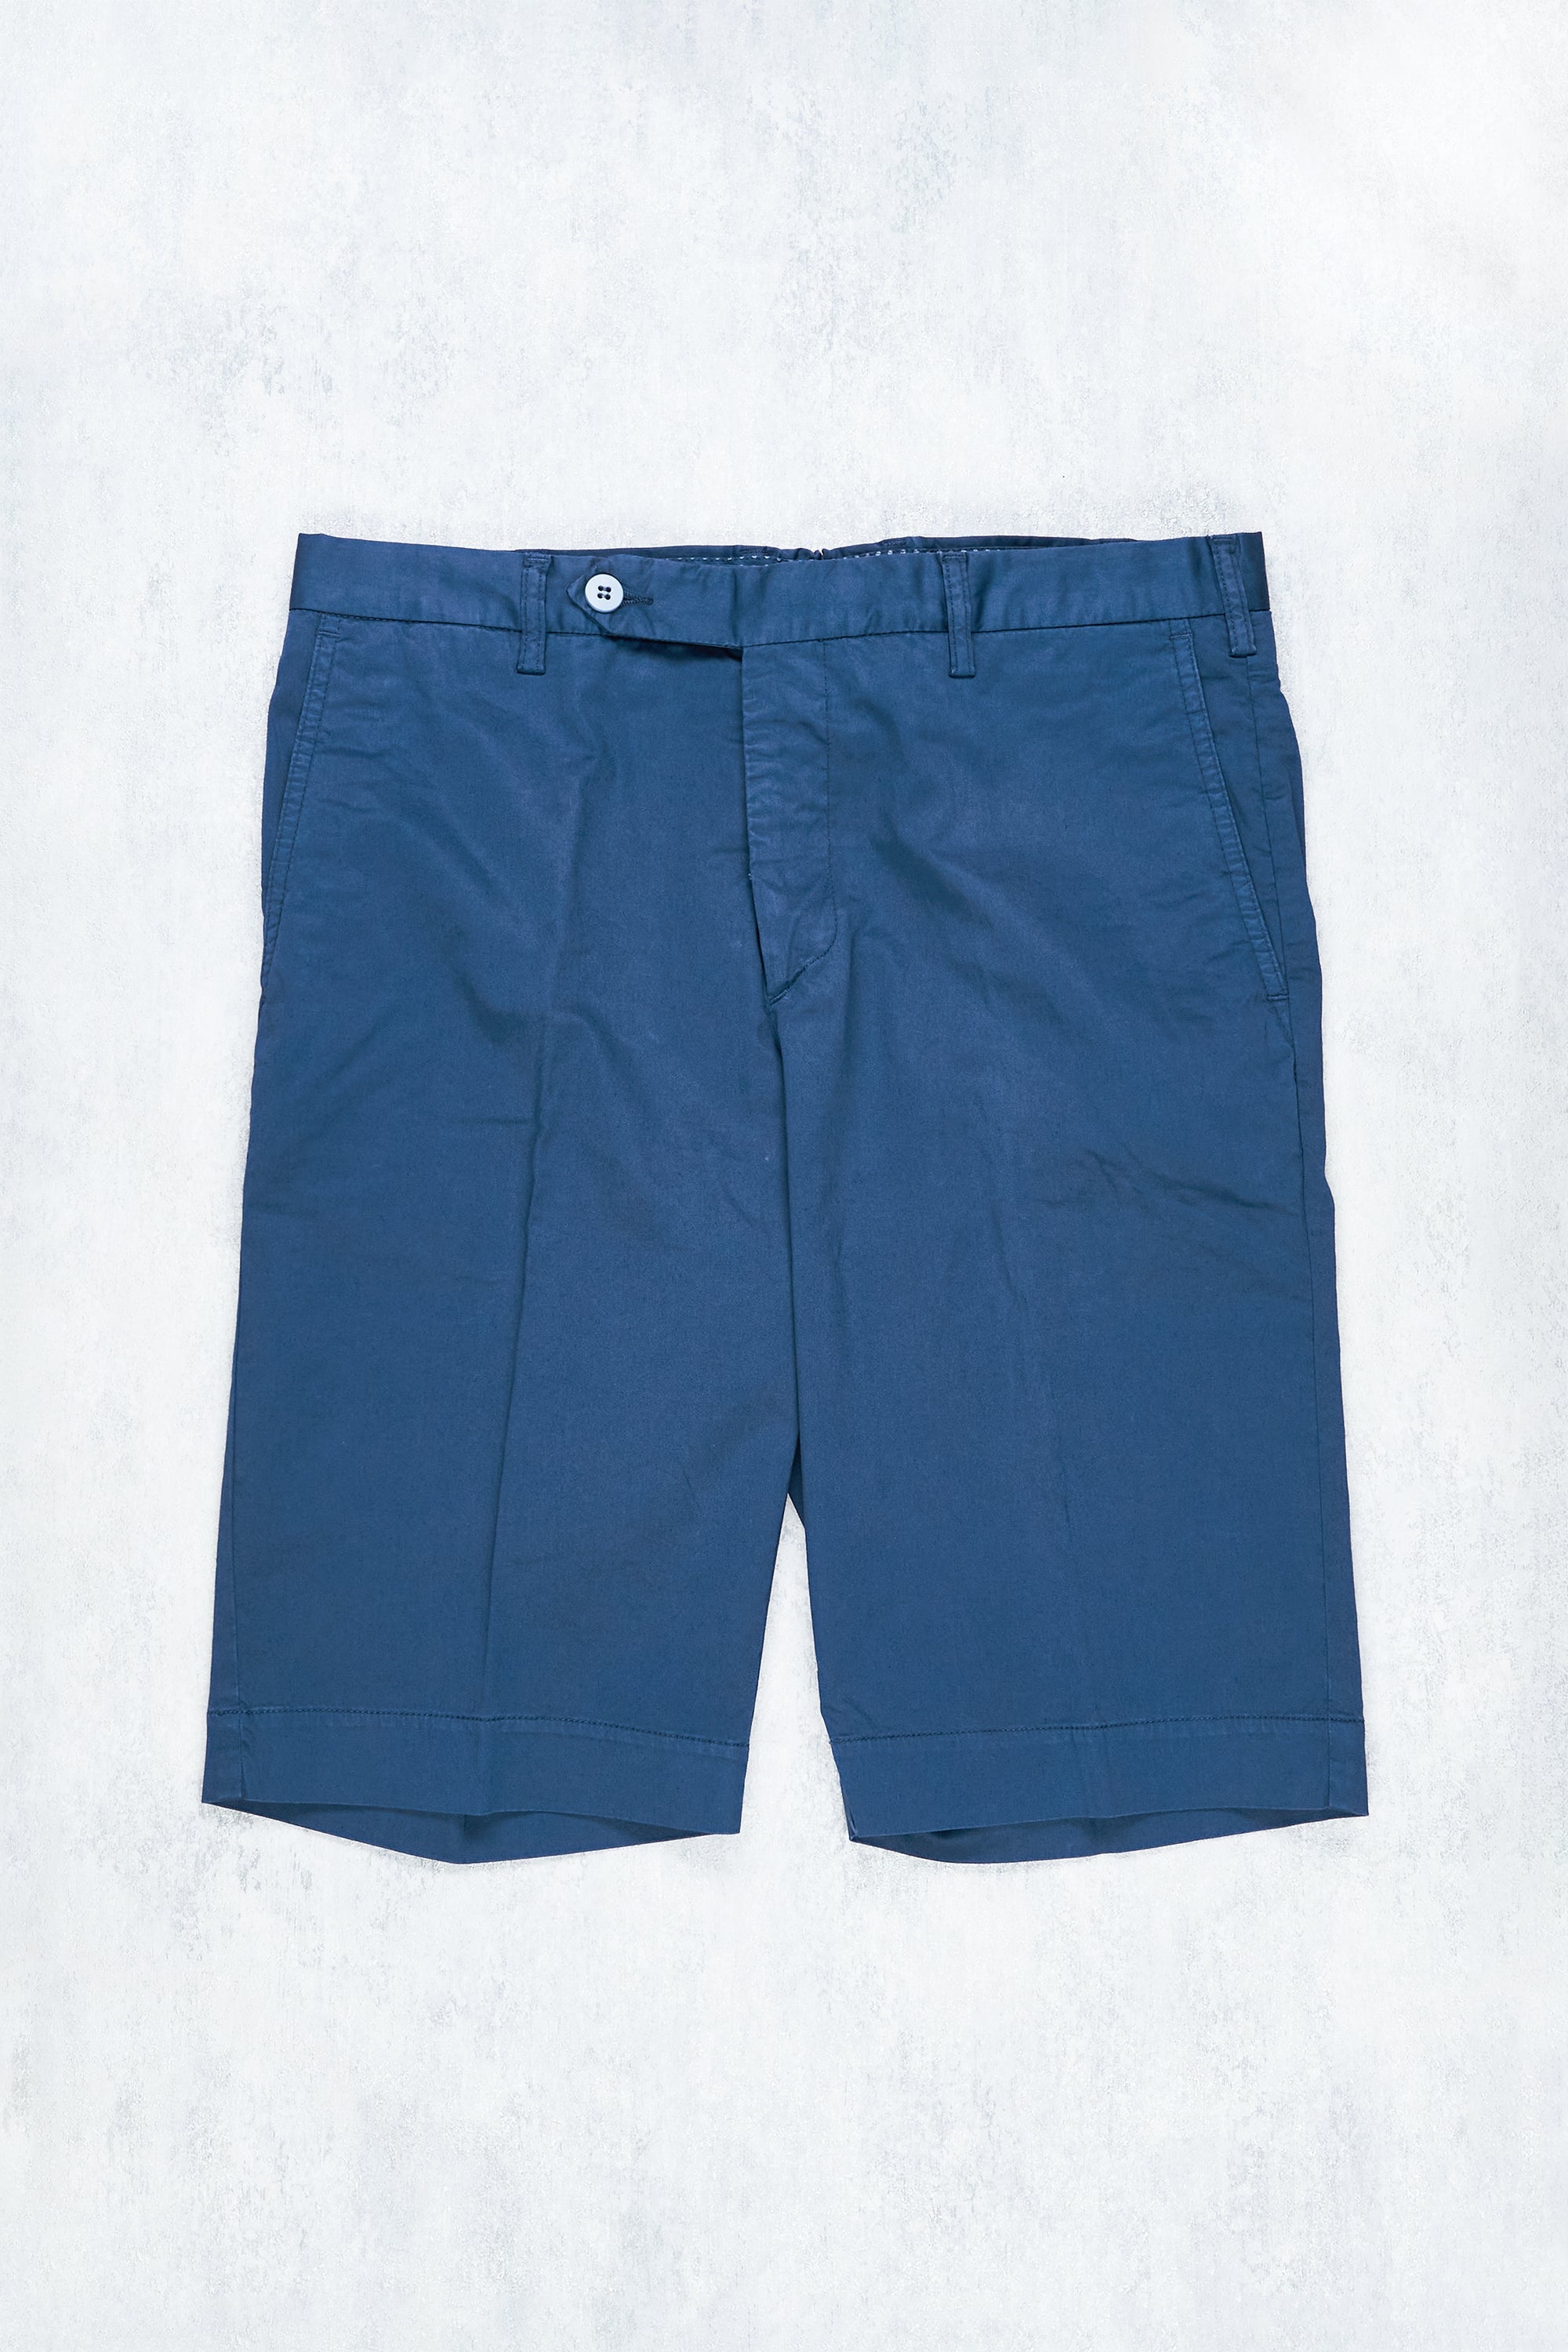 Rota BE290/2 Blue Cotton Shorts